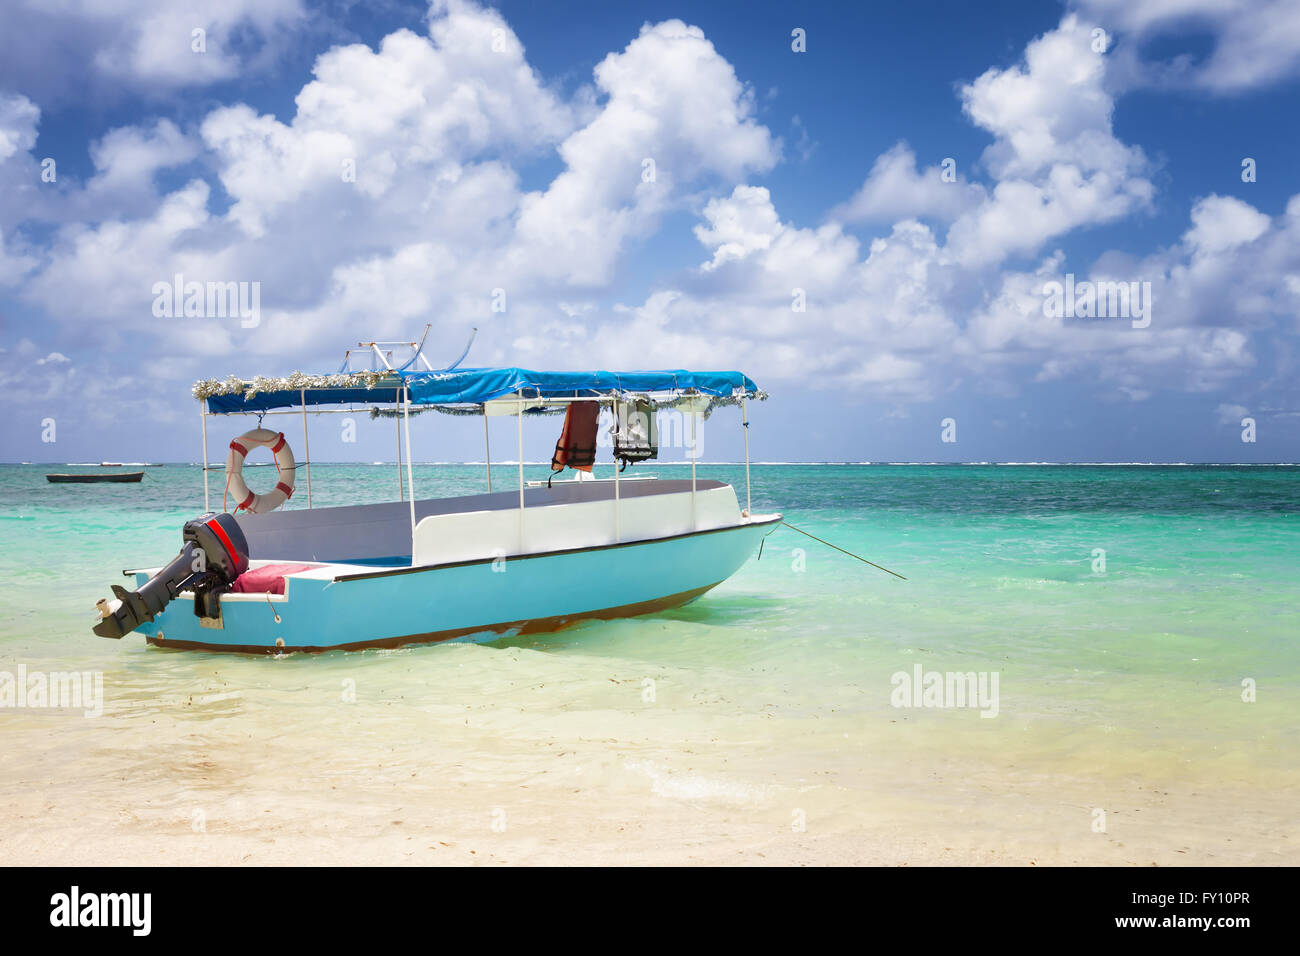 sub charter boat on the sea in mauritius tropical island Stock Photo